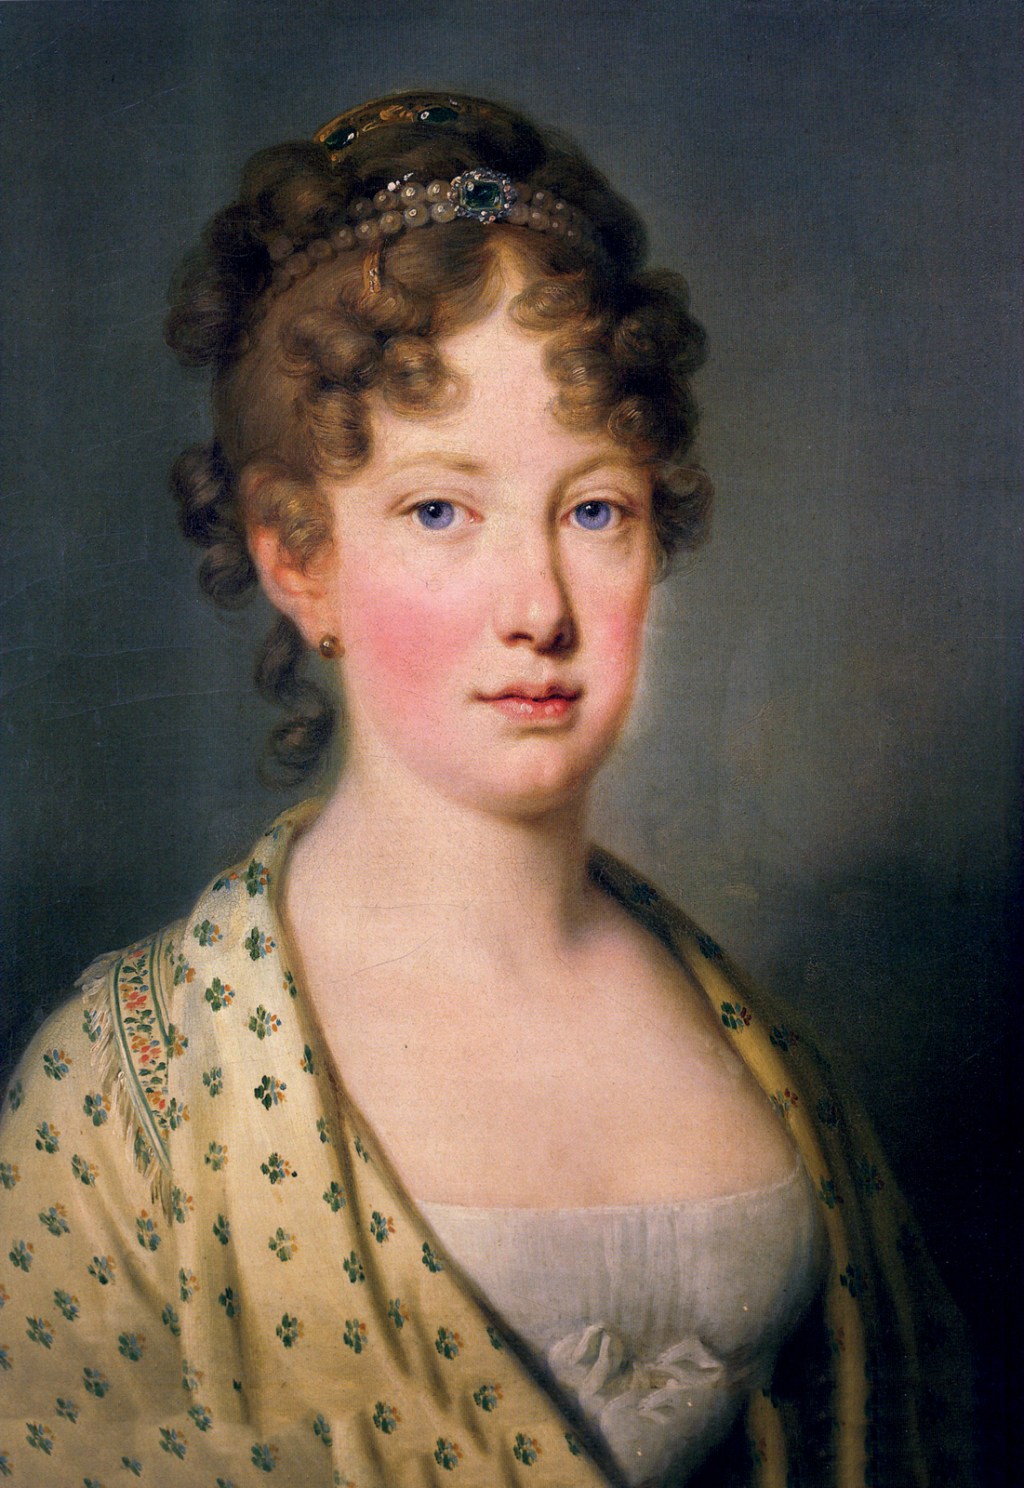 A PRIMEIRA - A imperatriz Maria Leopoldina: disputa com a amante, a futura marquesa de Santos